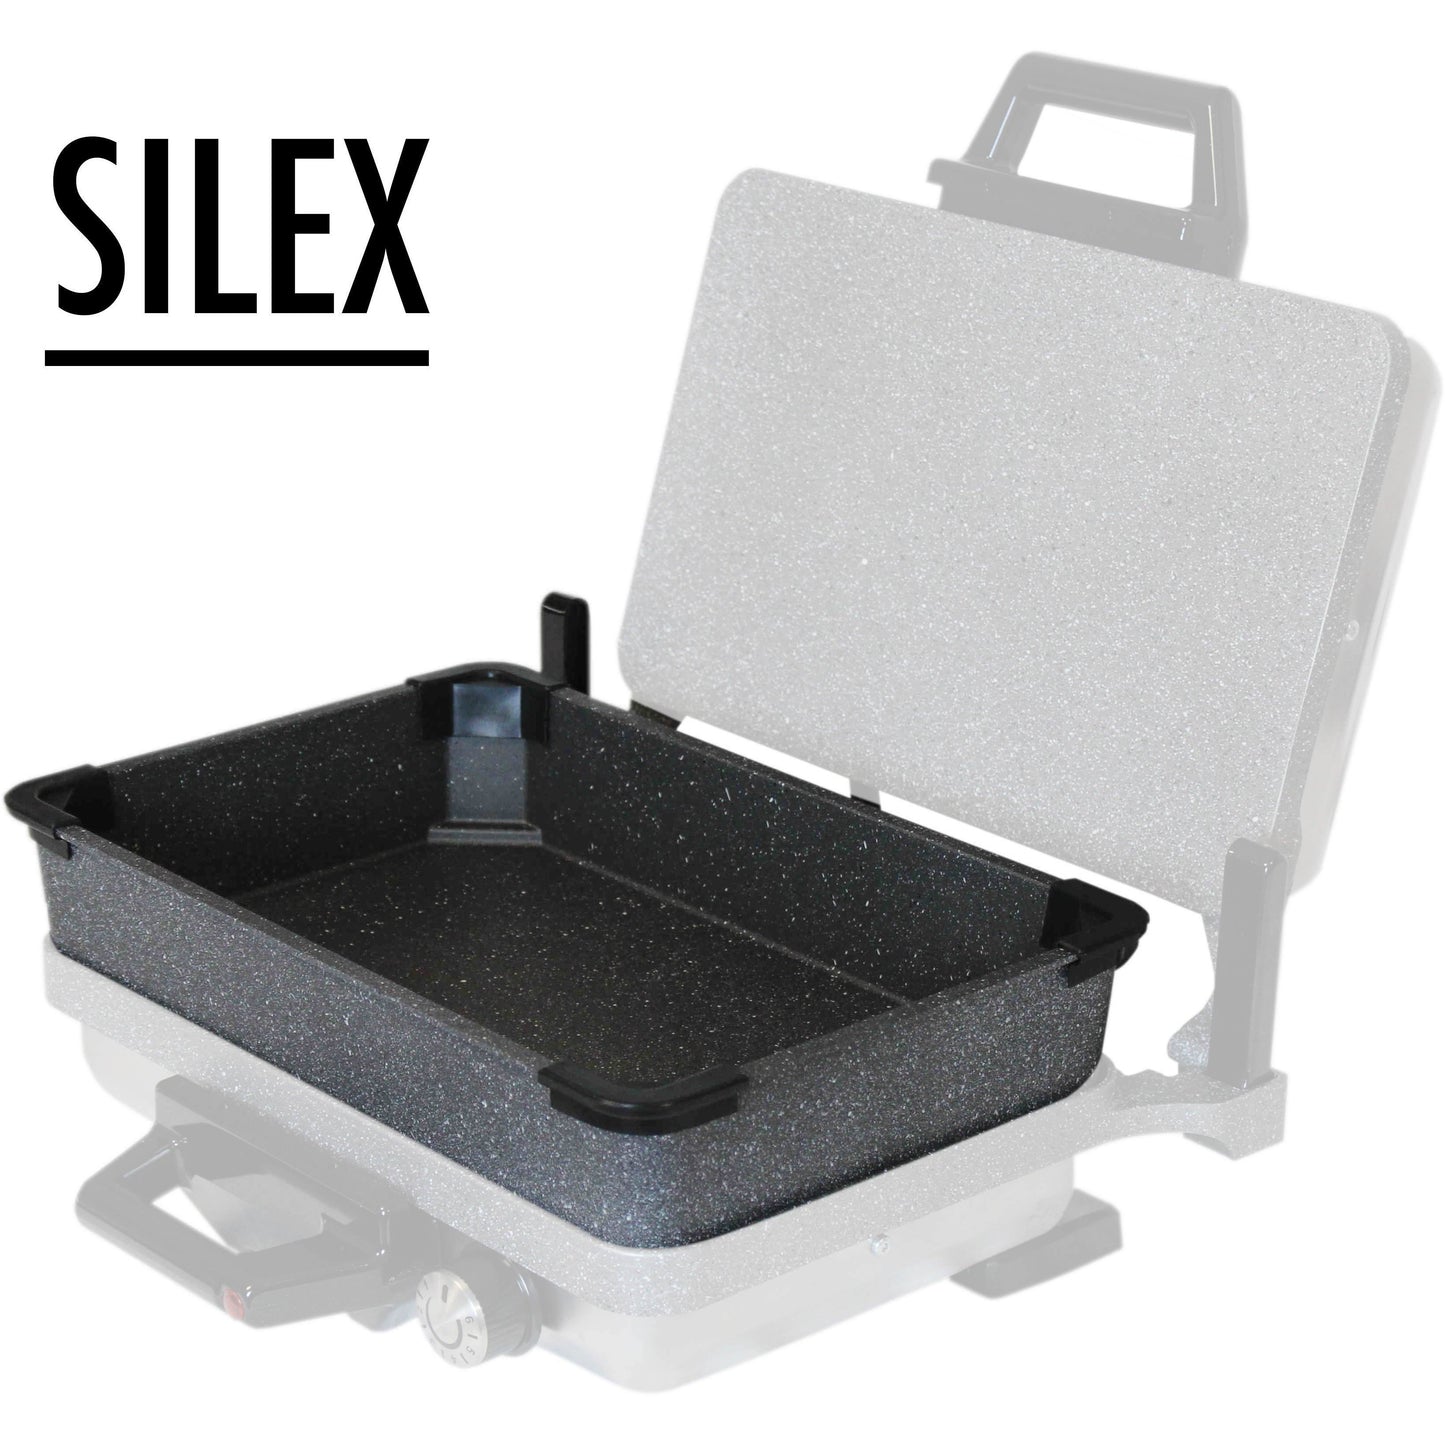 Poêle Silex (GRIL NON INCLUS) - Axess